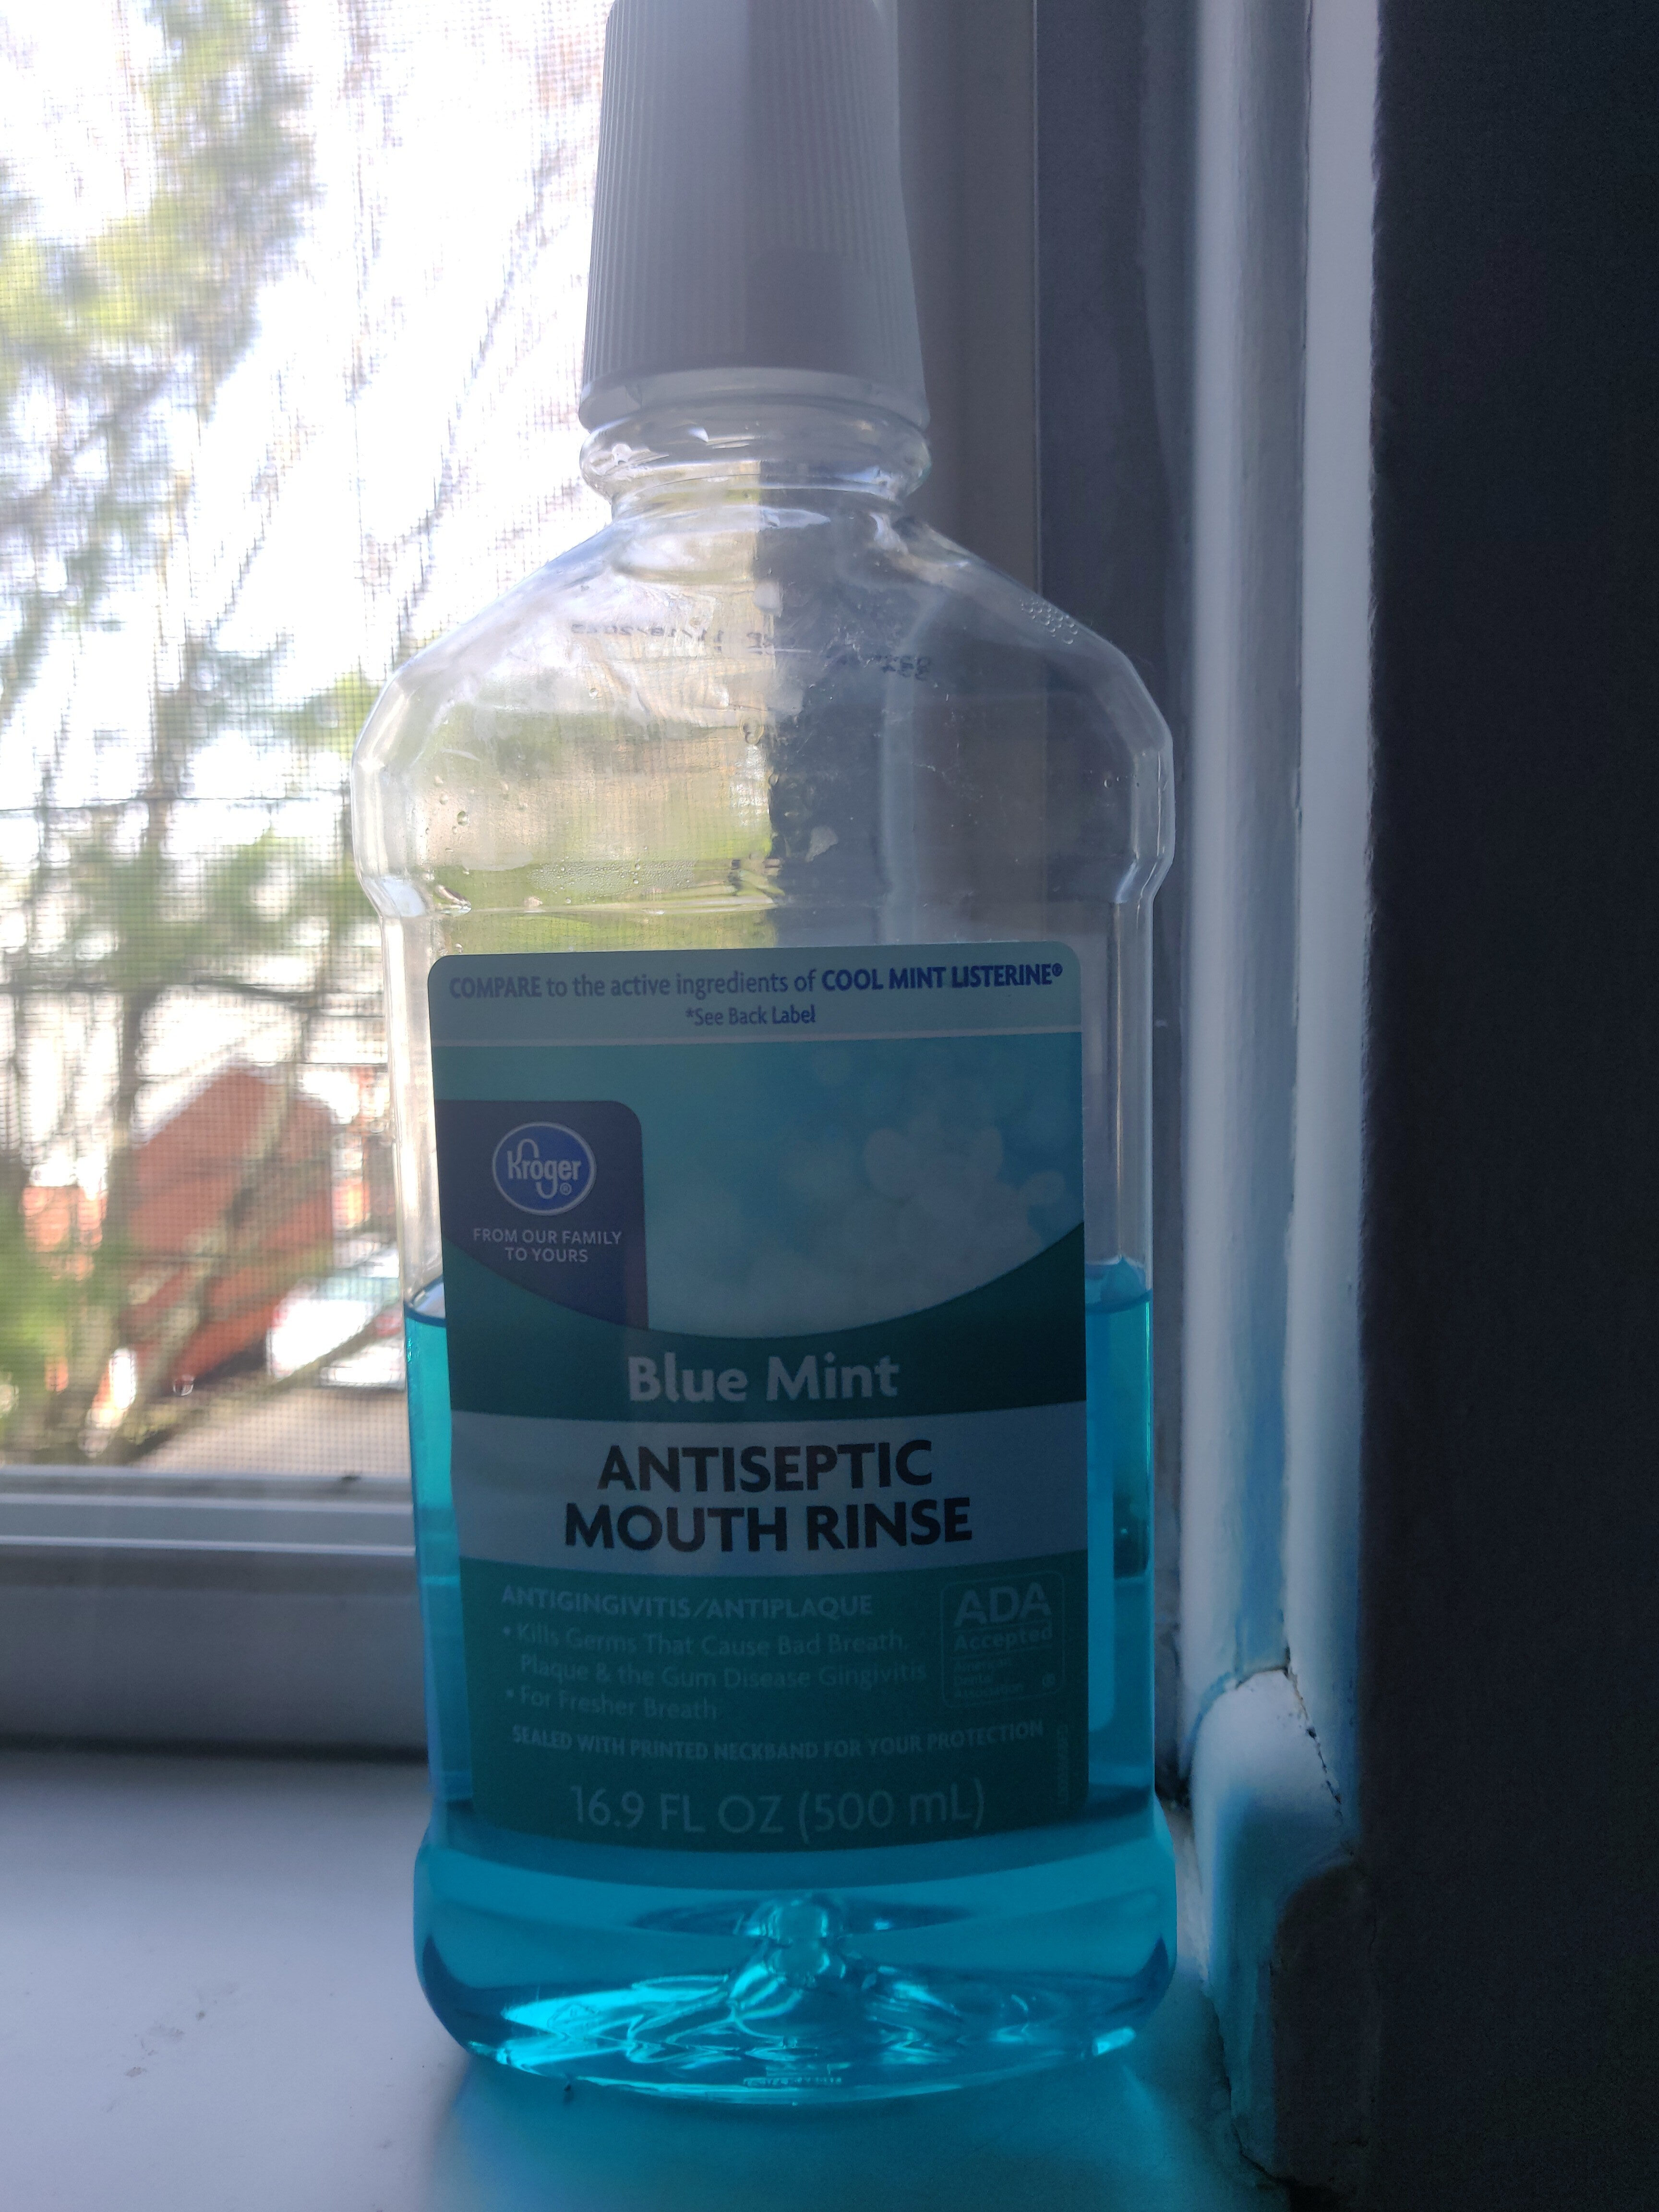 Antiseptic Mouth Rinse - Produkt - en